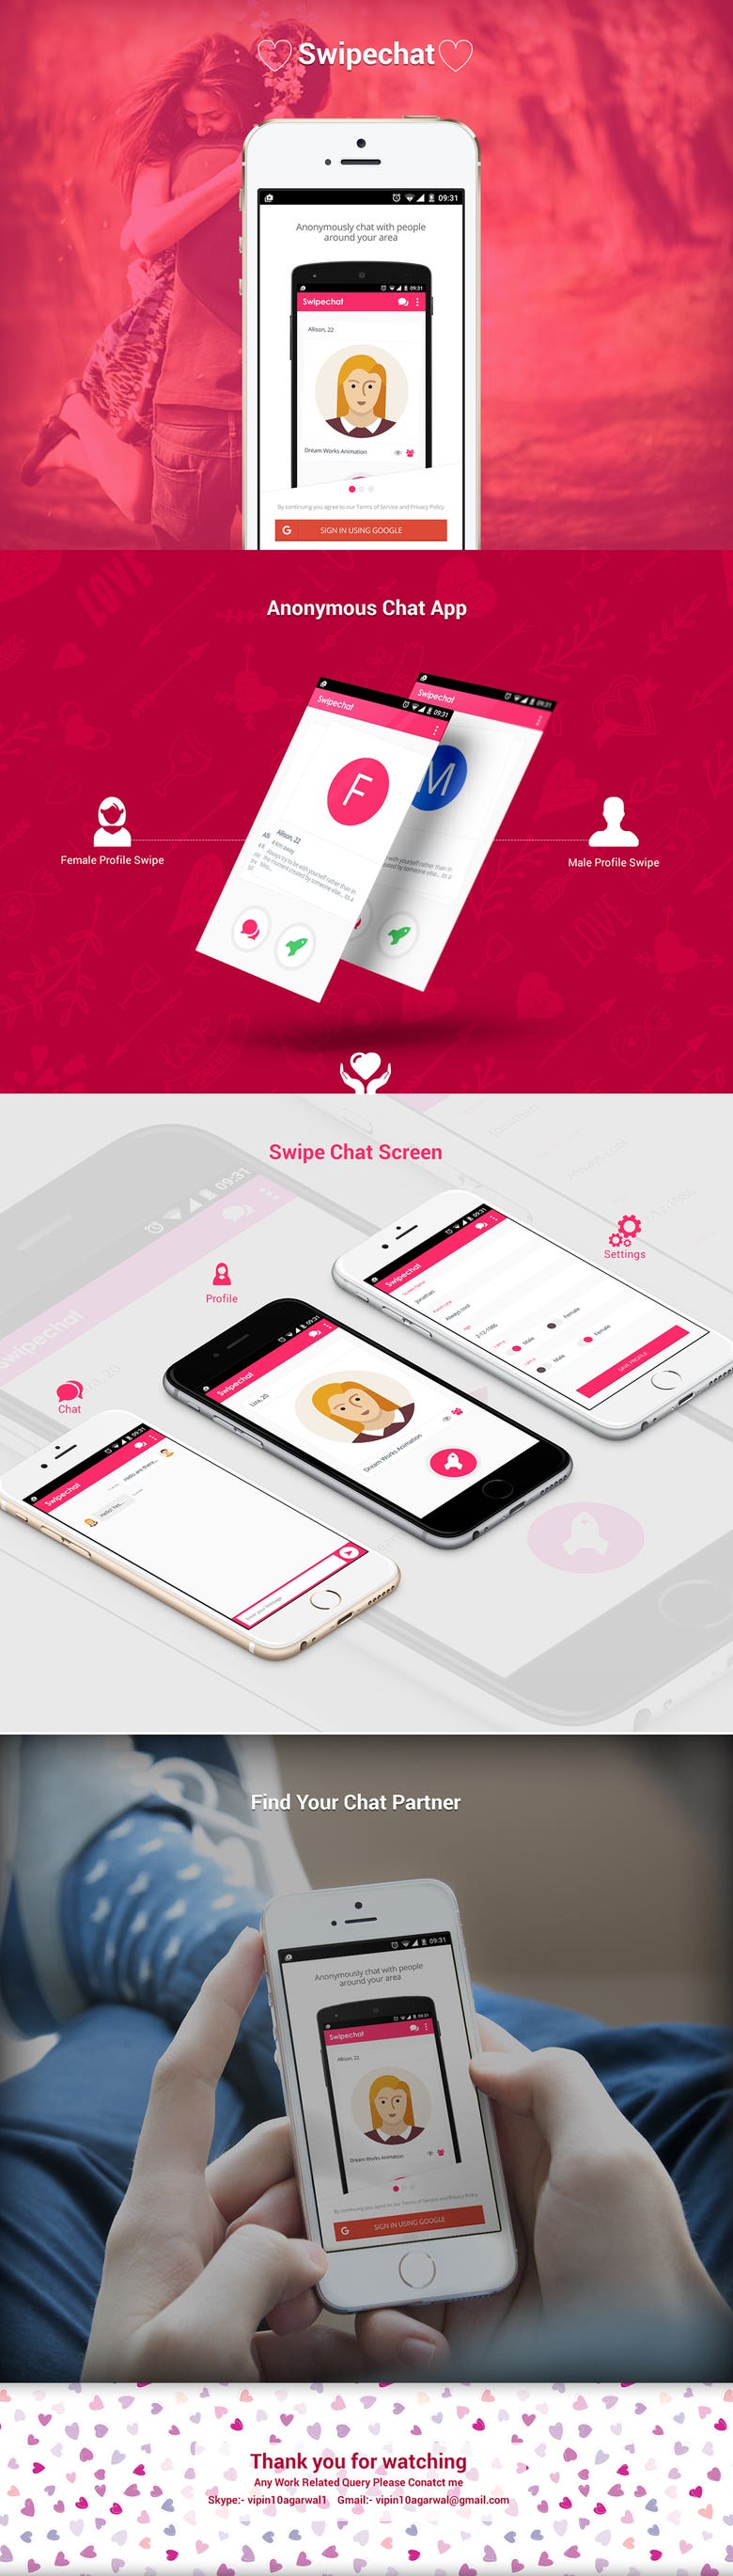 Swipechat App Design